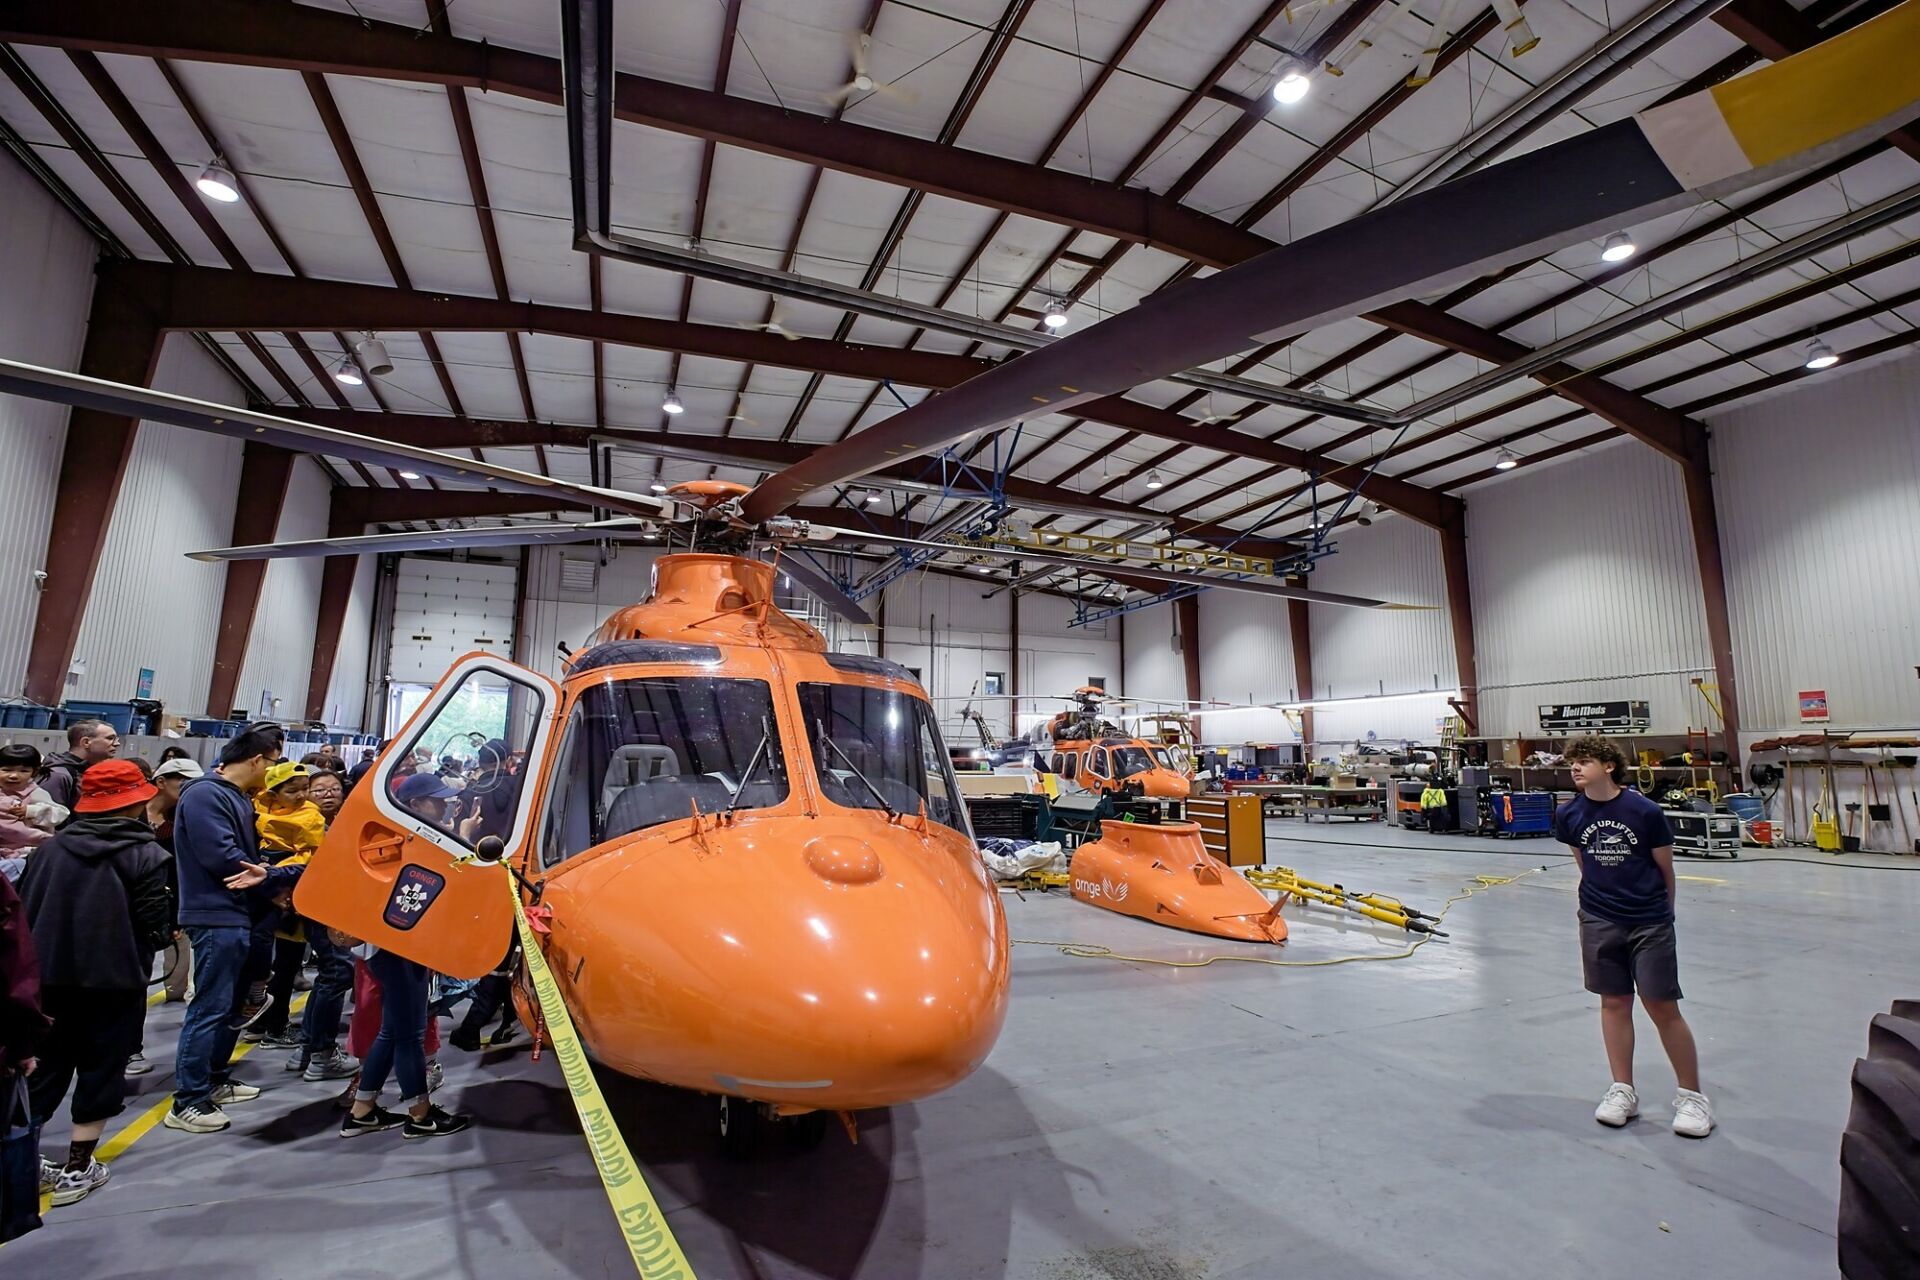 Air ambulance inside the hanger